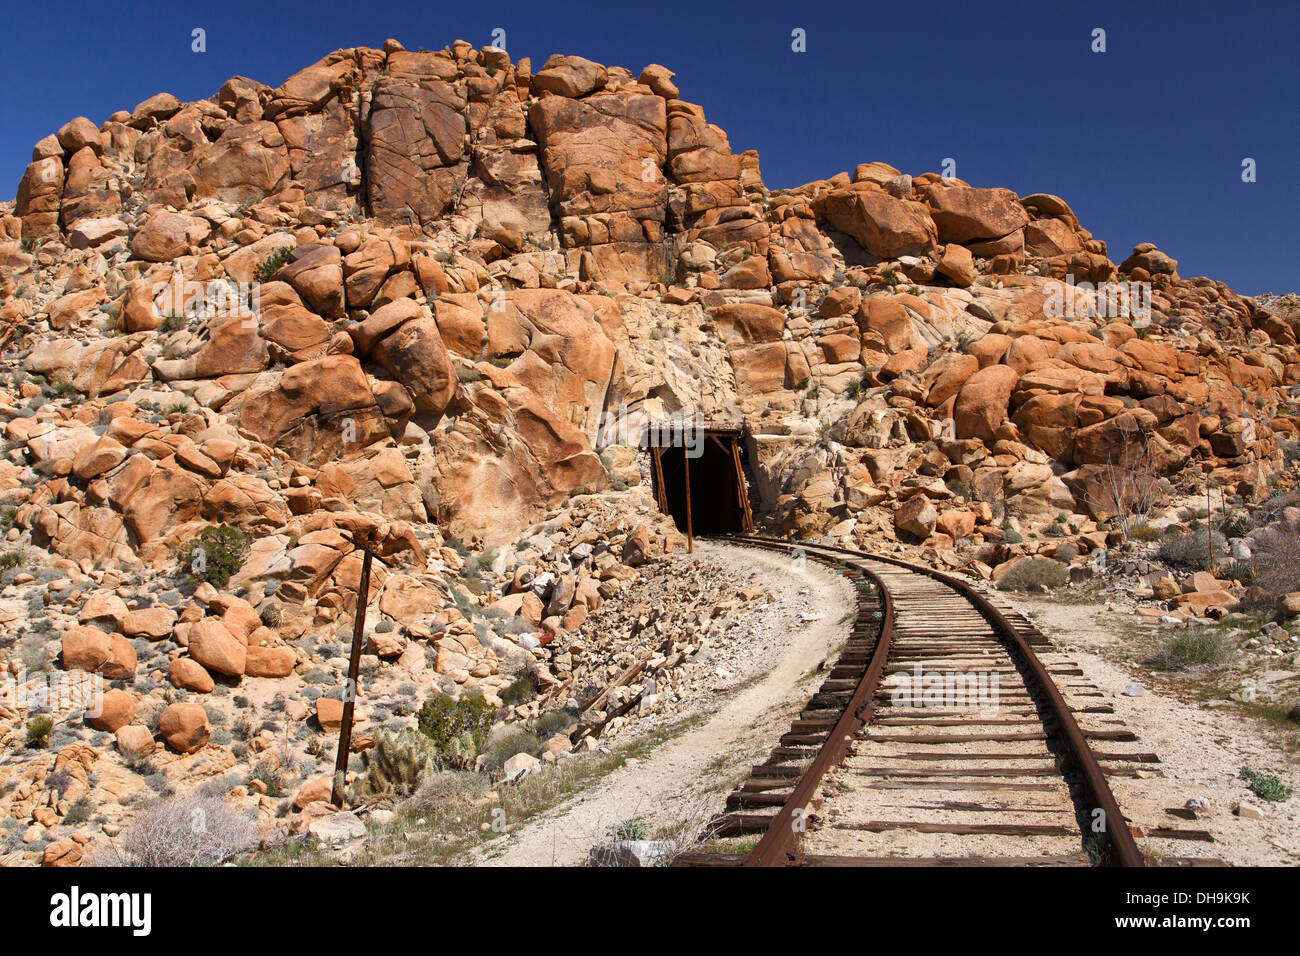 Carrizo Gorge Railroad Track, Anza-Borrego Desert State Park, California. Stock Photo